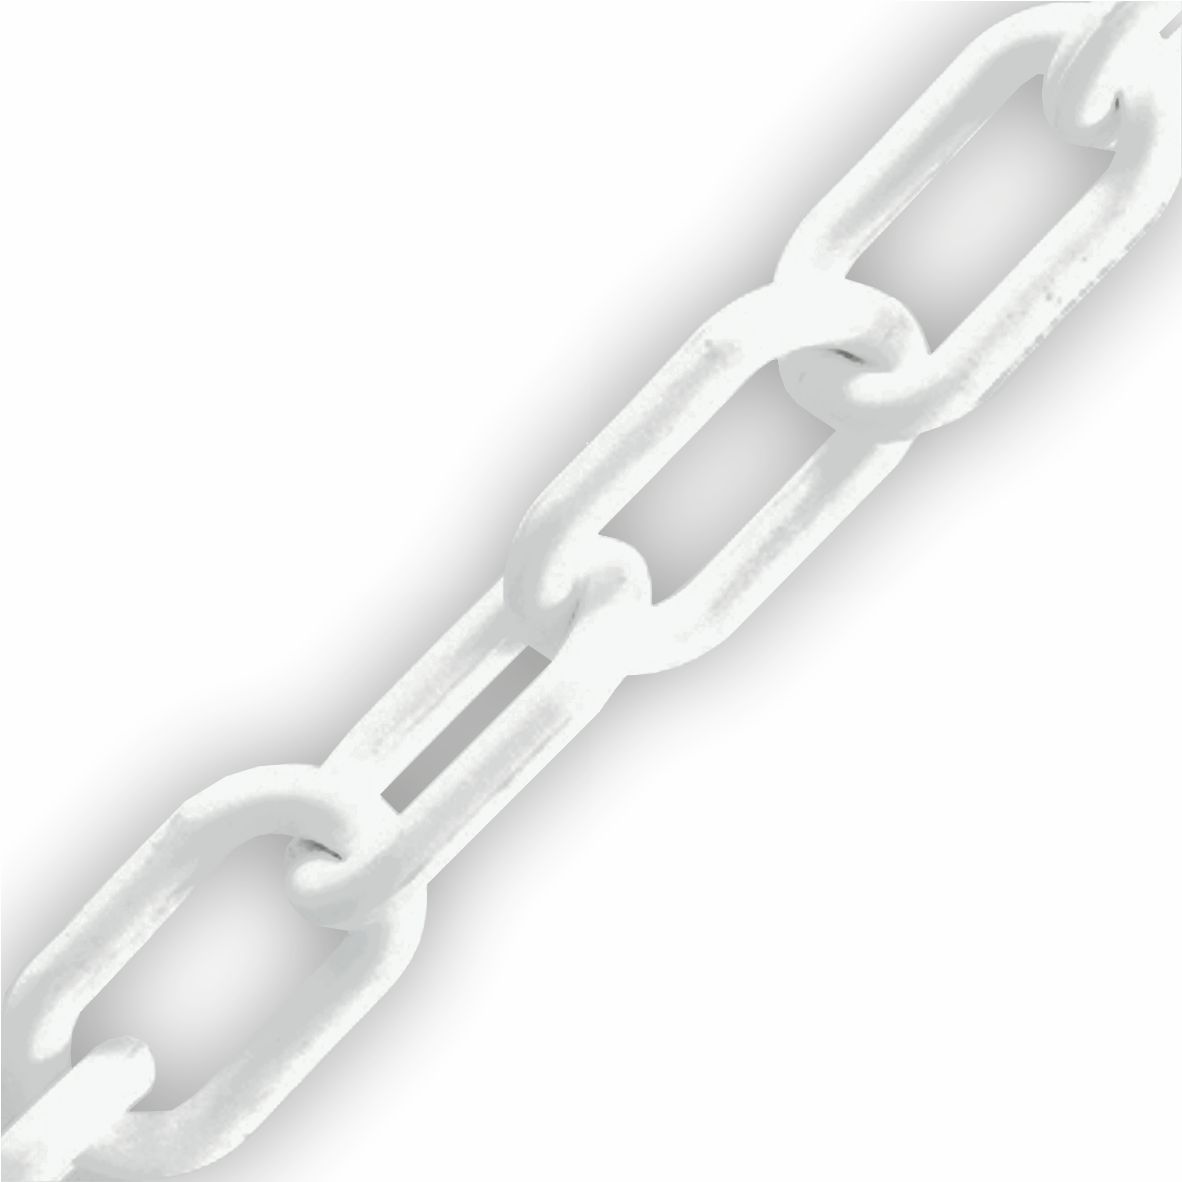 White Plastic Chain by the metre (maximum length 25m)